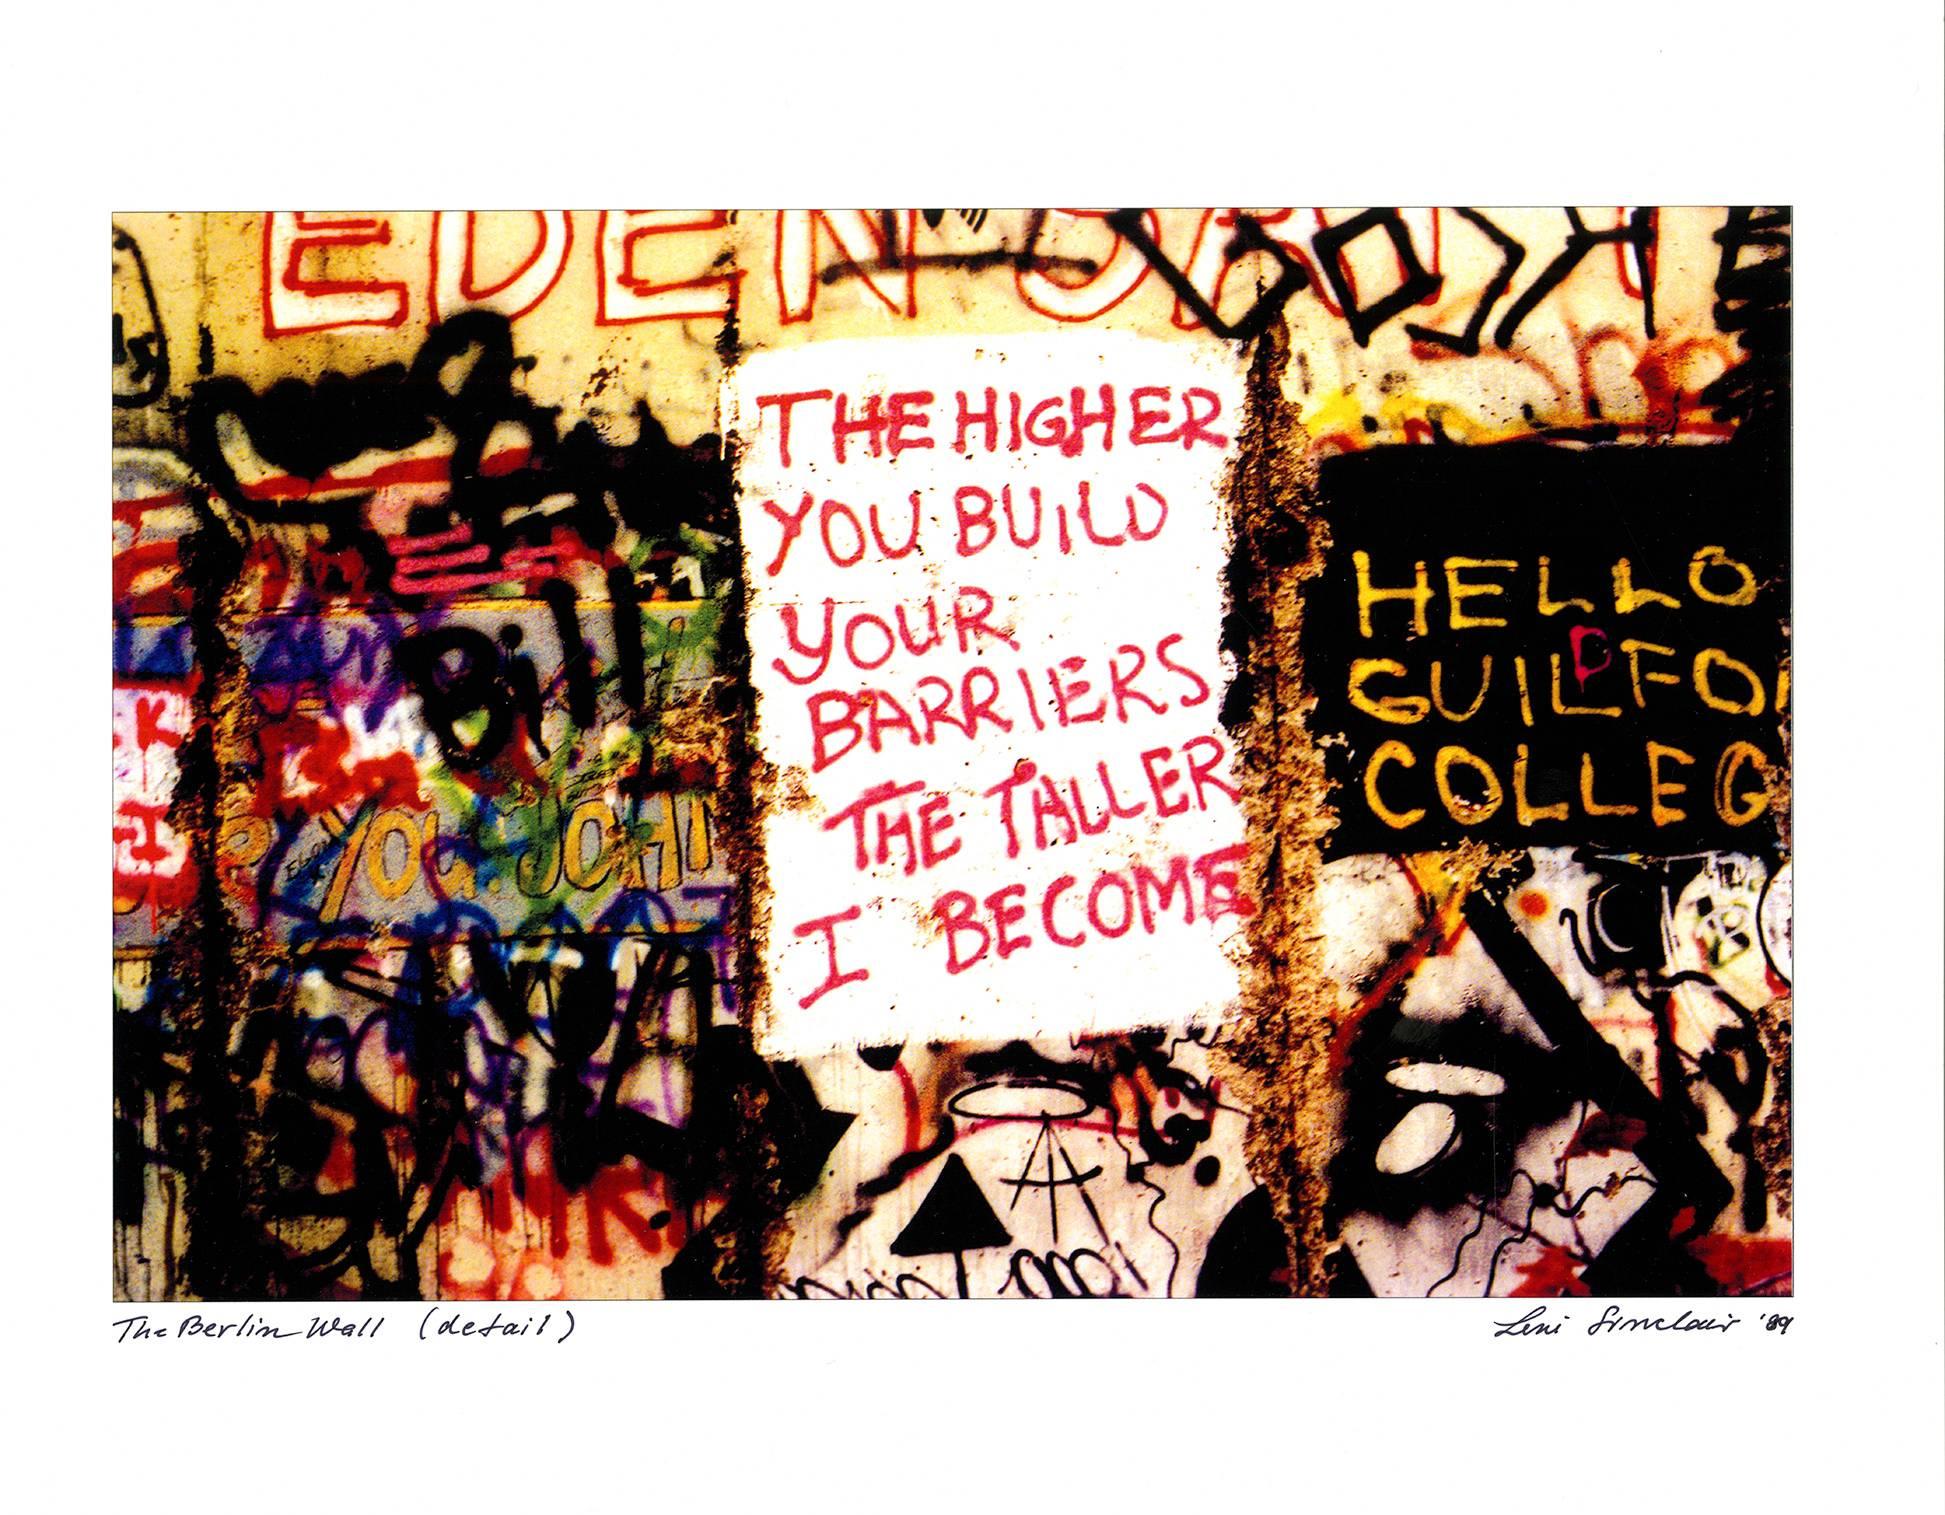 Berlin Wall Photograph 1989 (Berlin street photography Leni Sinclair)  1